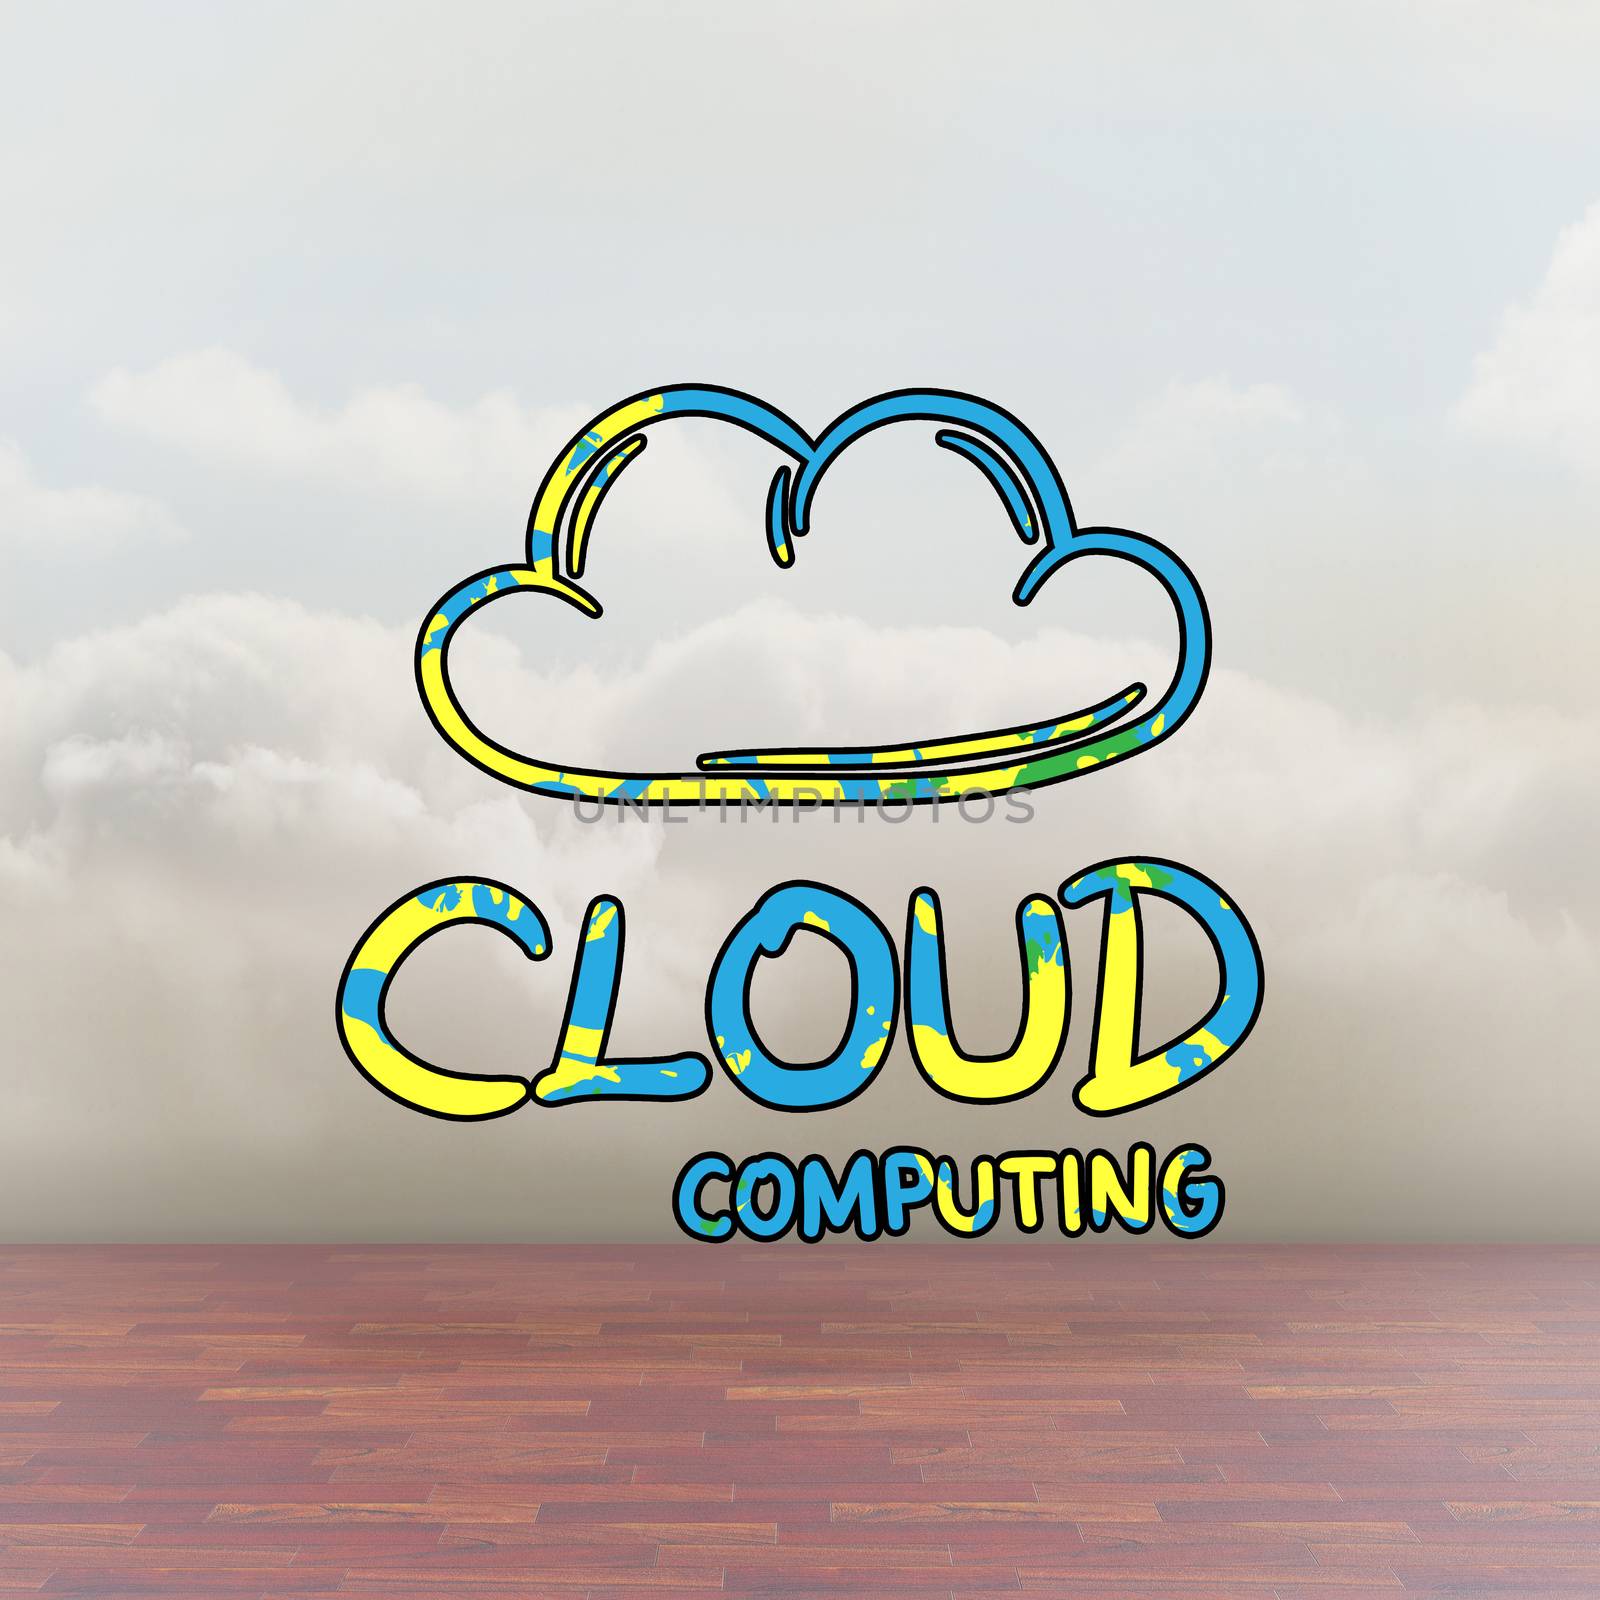 Composite image of cloud computing by Wavebreakmedia